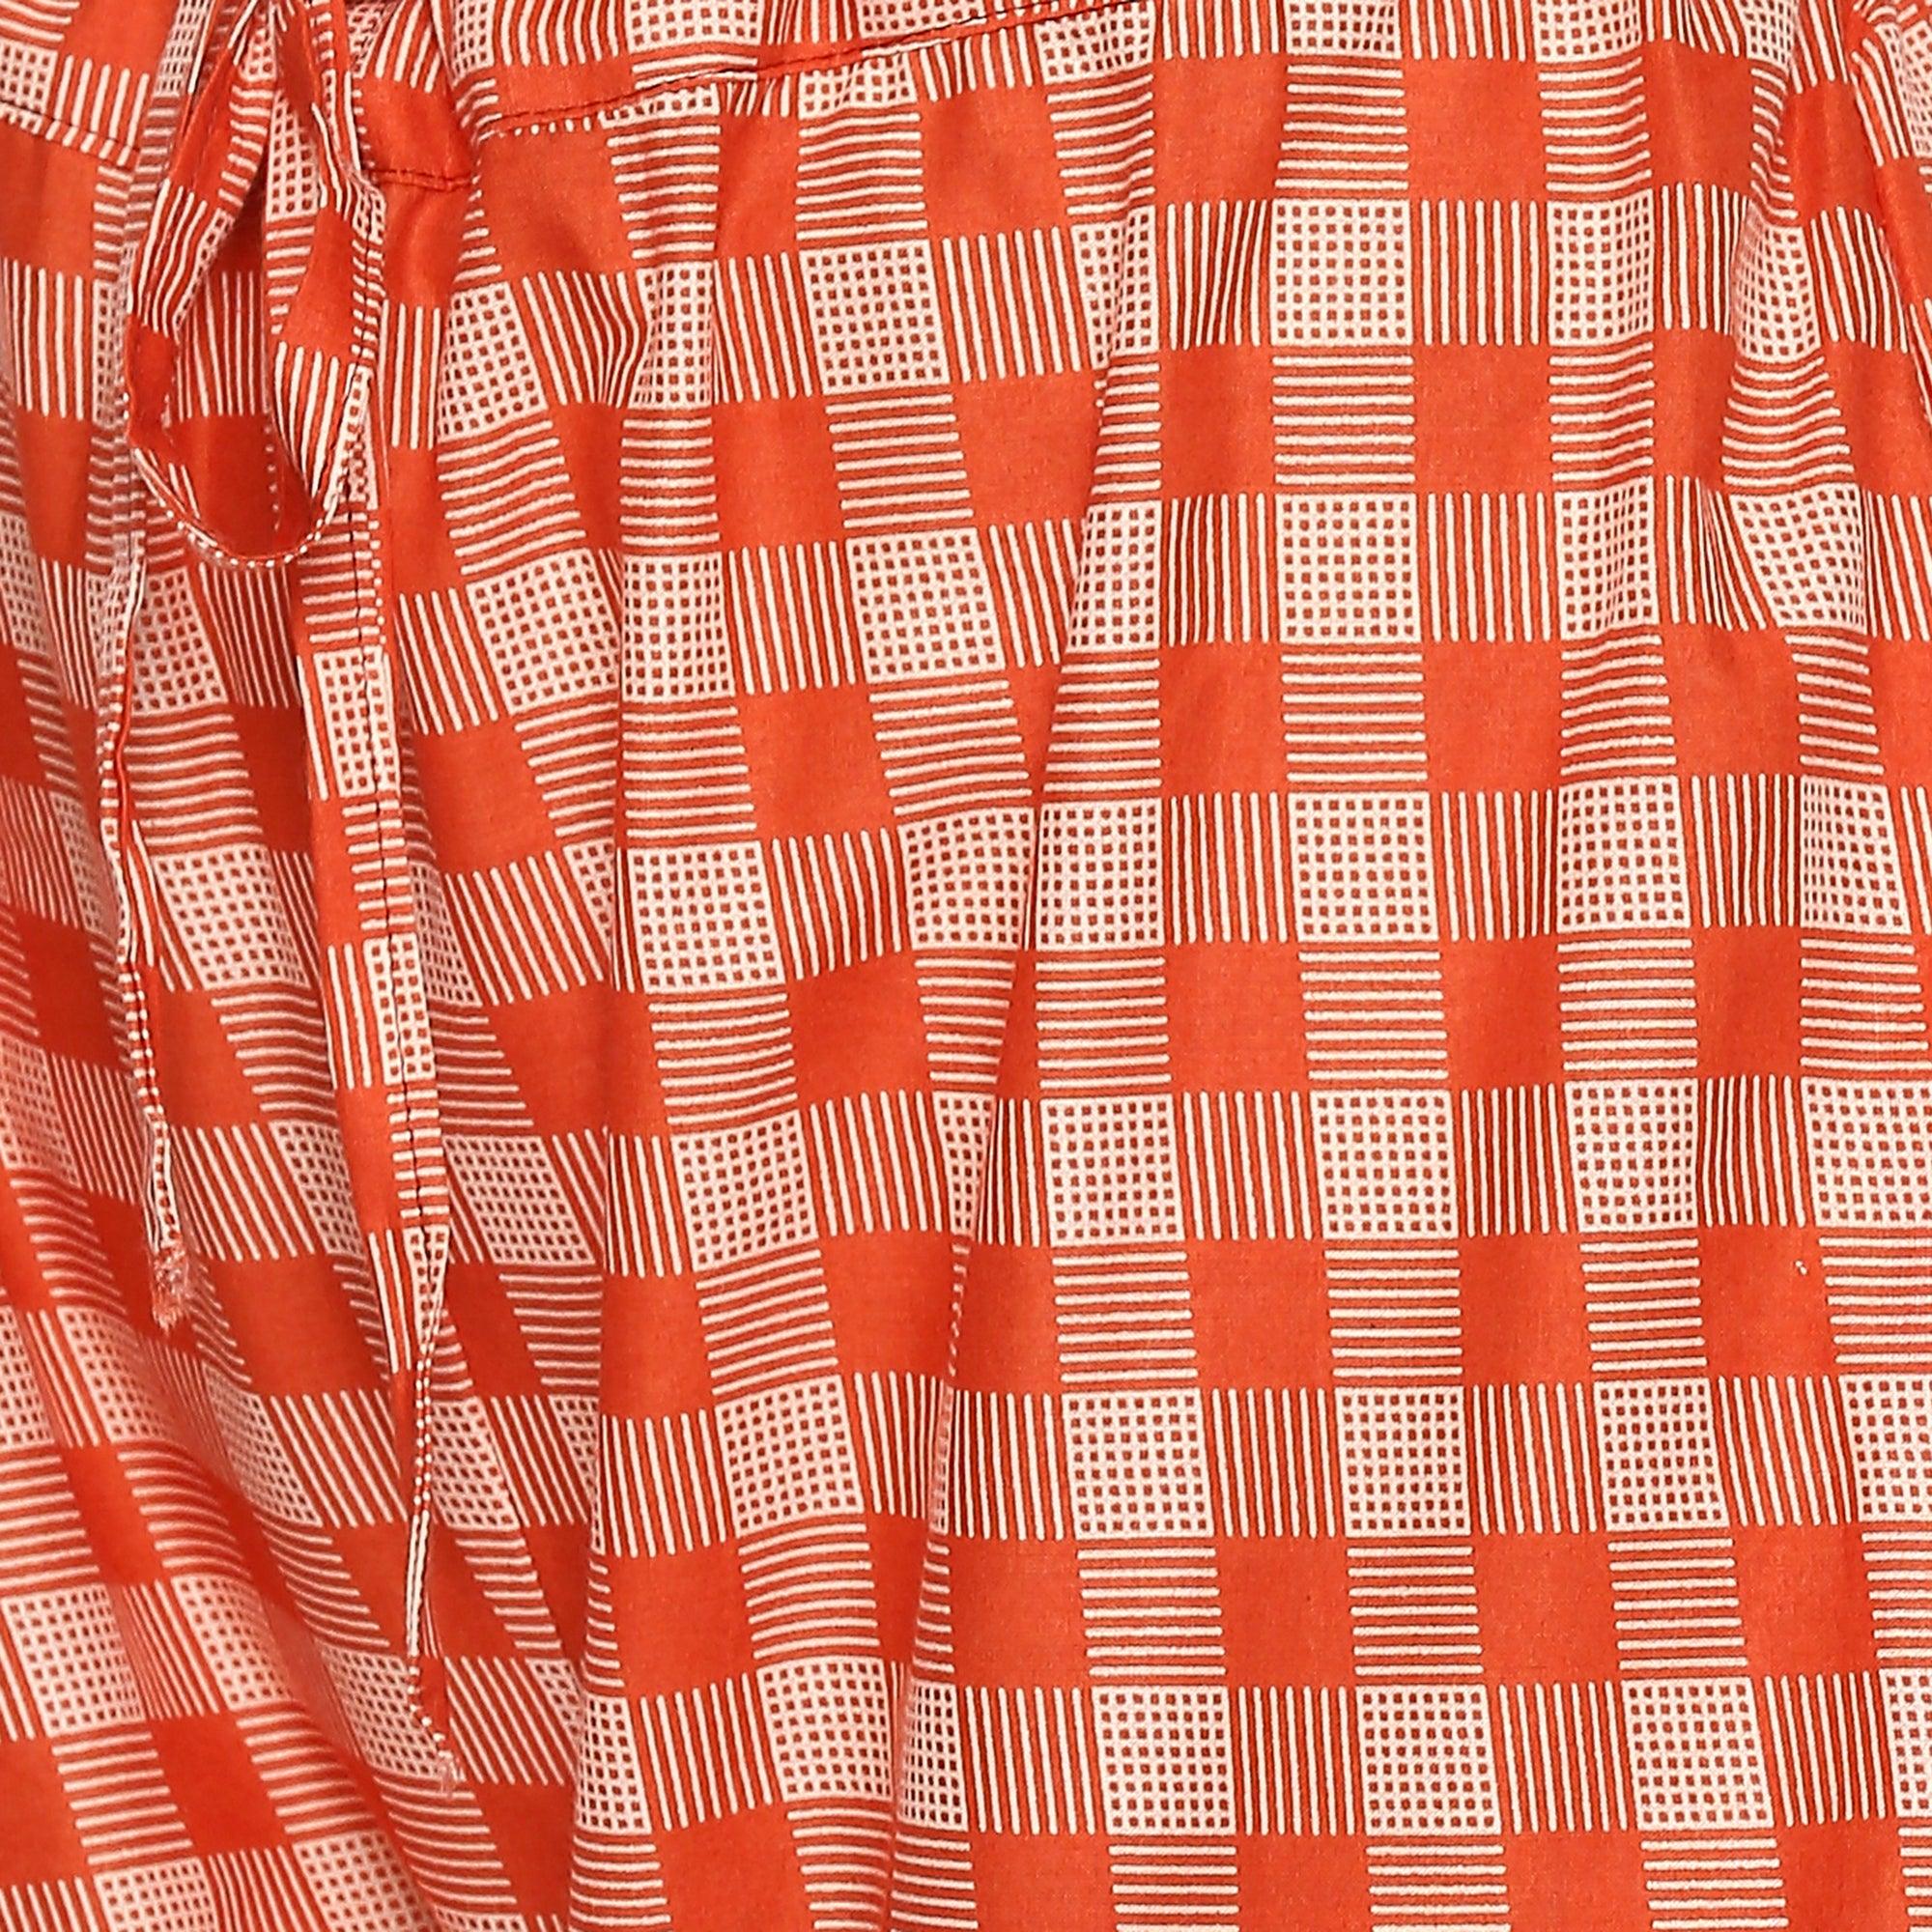 Jazzy Peach Colored Casual Wear Printed Cotton Kurti-Pant Set - Peachmode